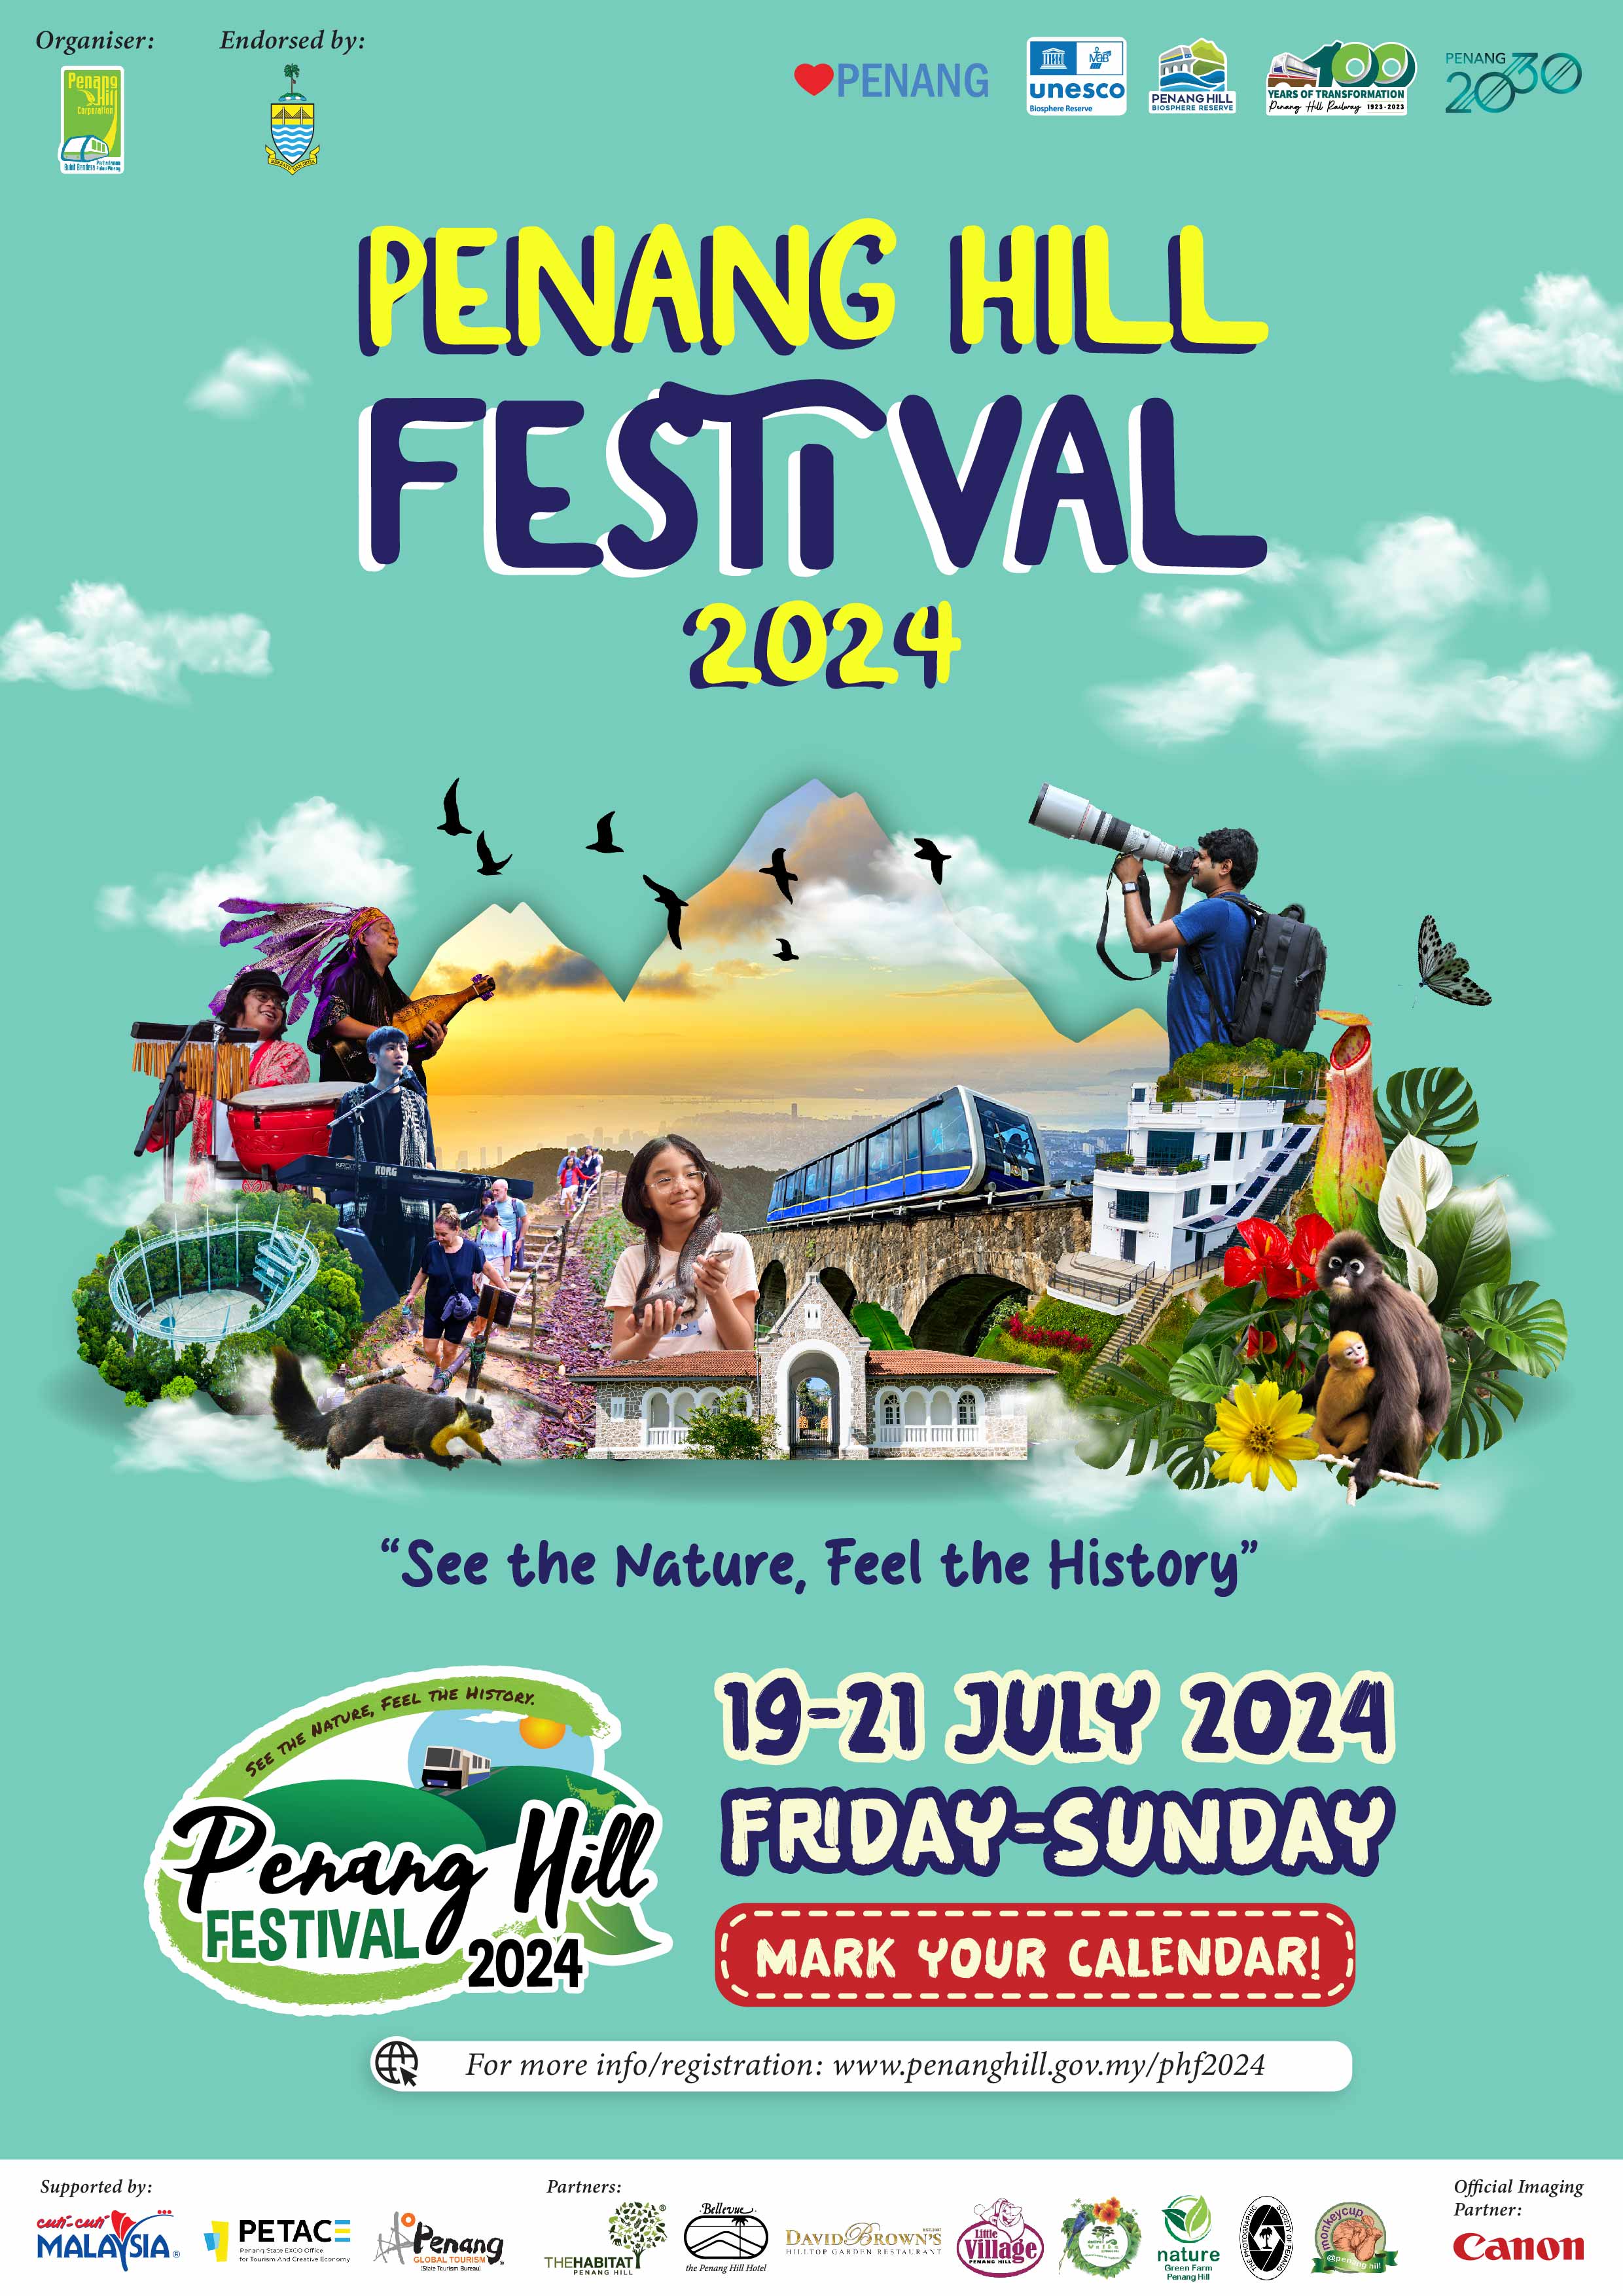 Penang Hill Festival 2024, 19 - 21 July 2024